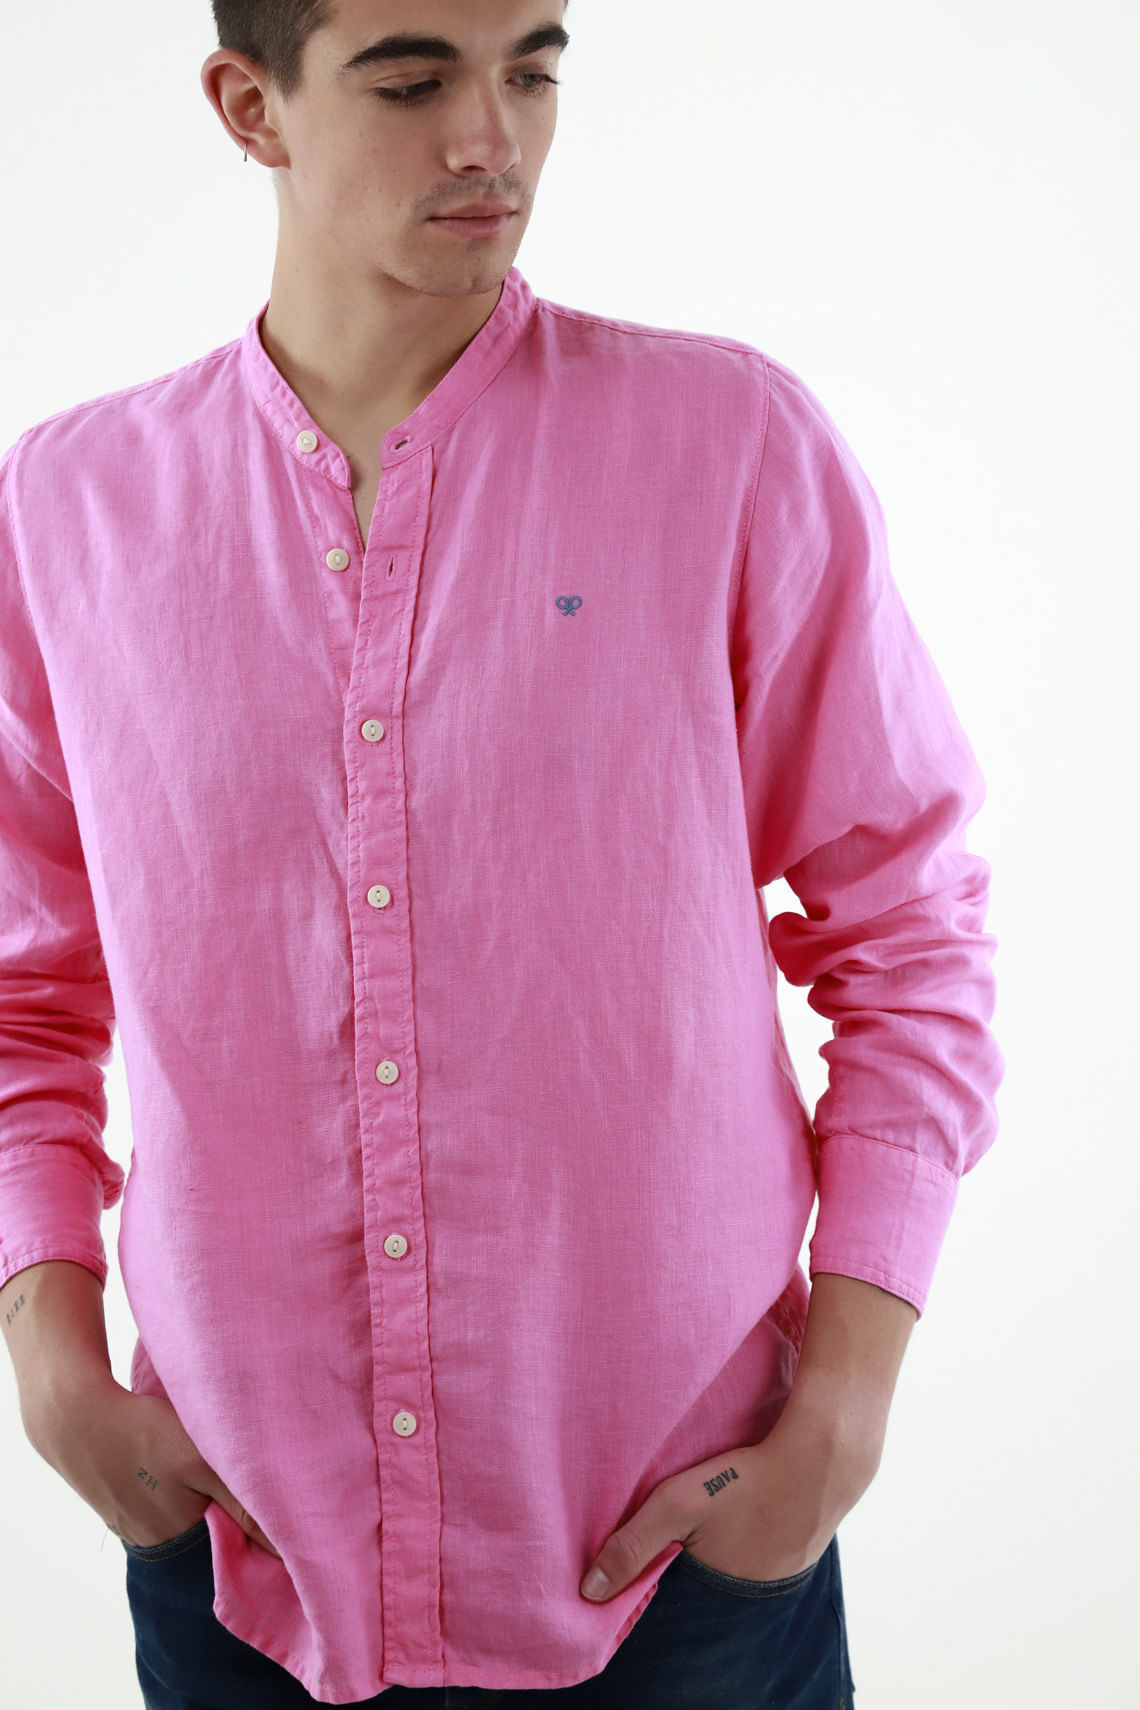 semiconductor Incompetencia Gracioso Camisa rosada manga larga para hombre - Agaval